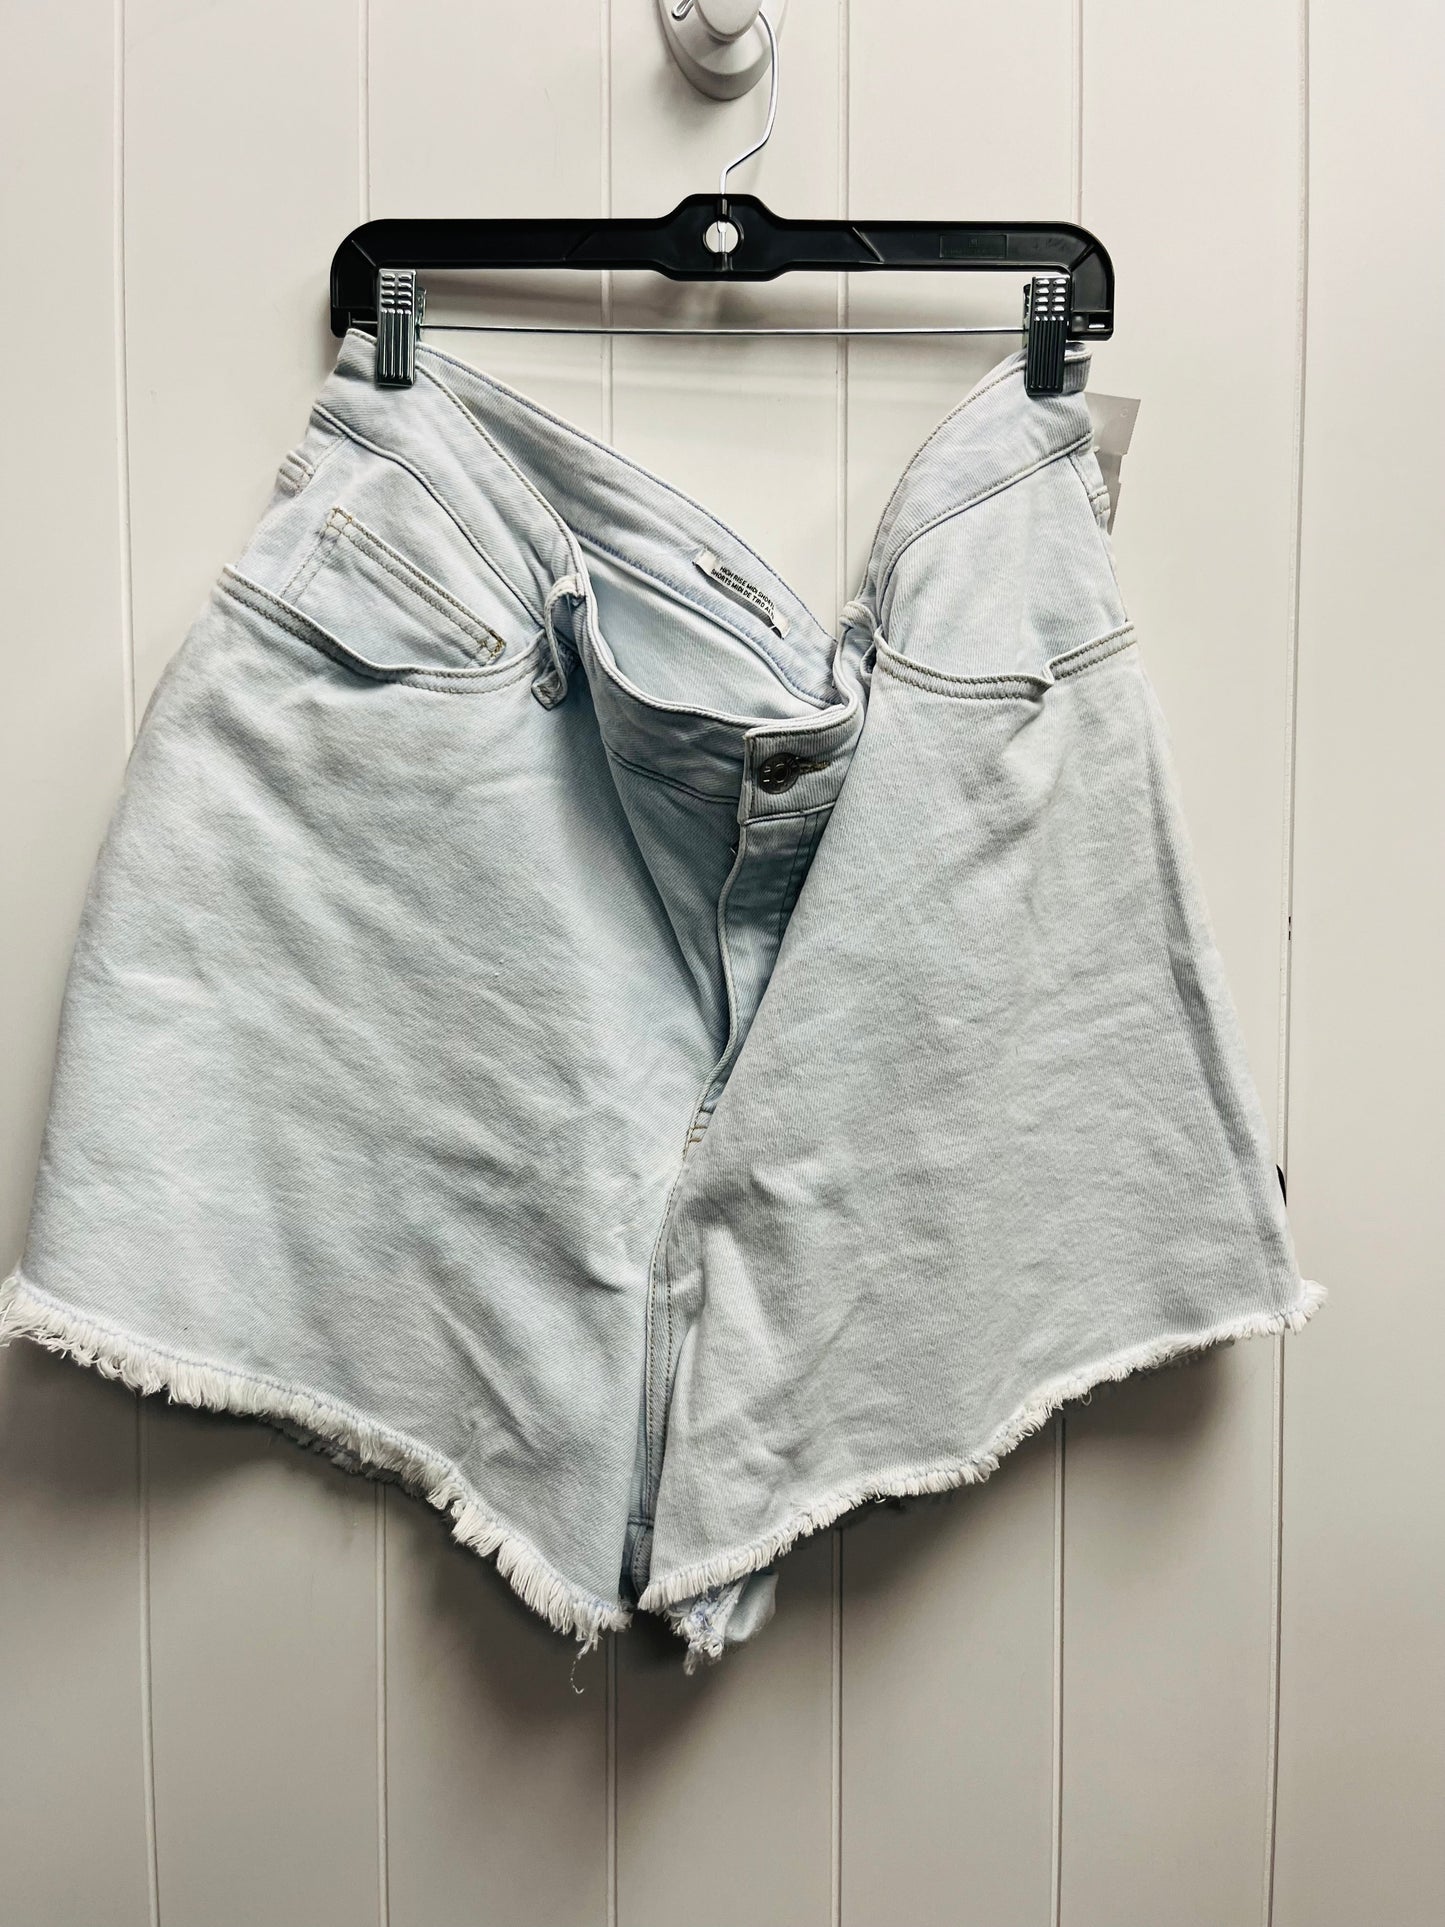 Blue Denim Shorts Ava & Viv, Size 24